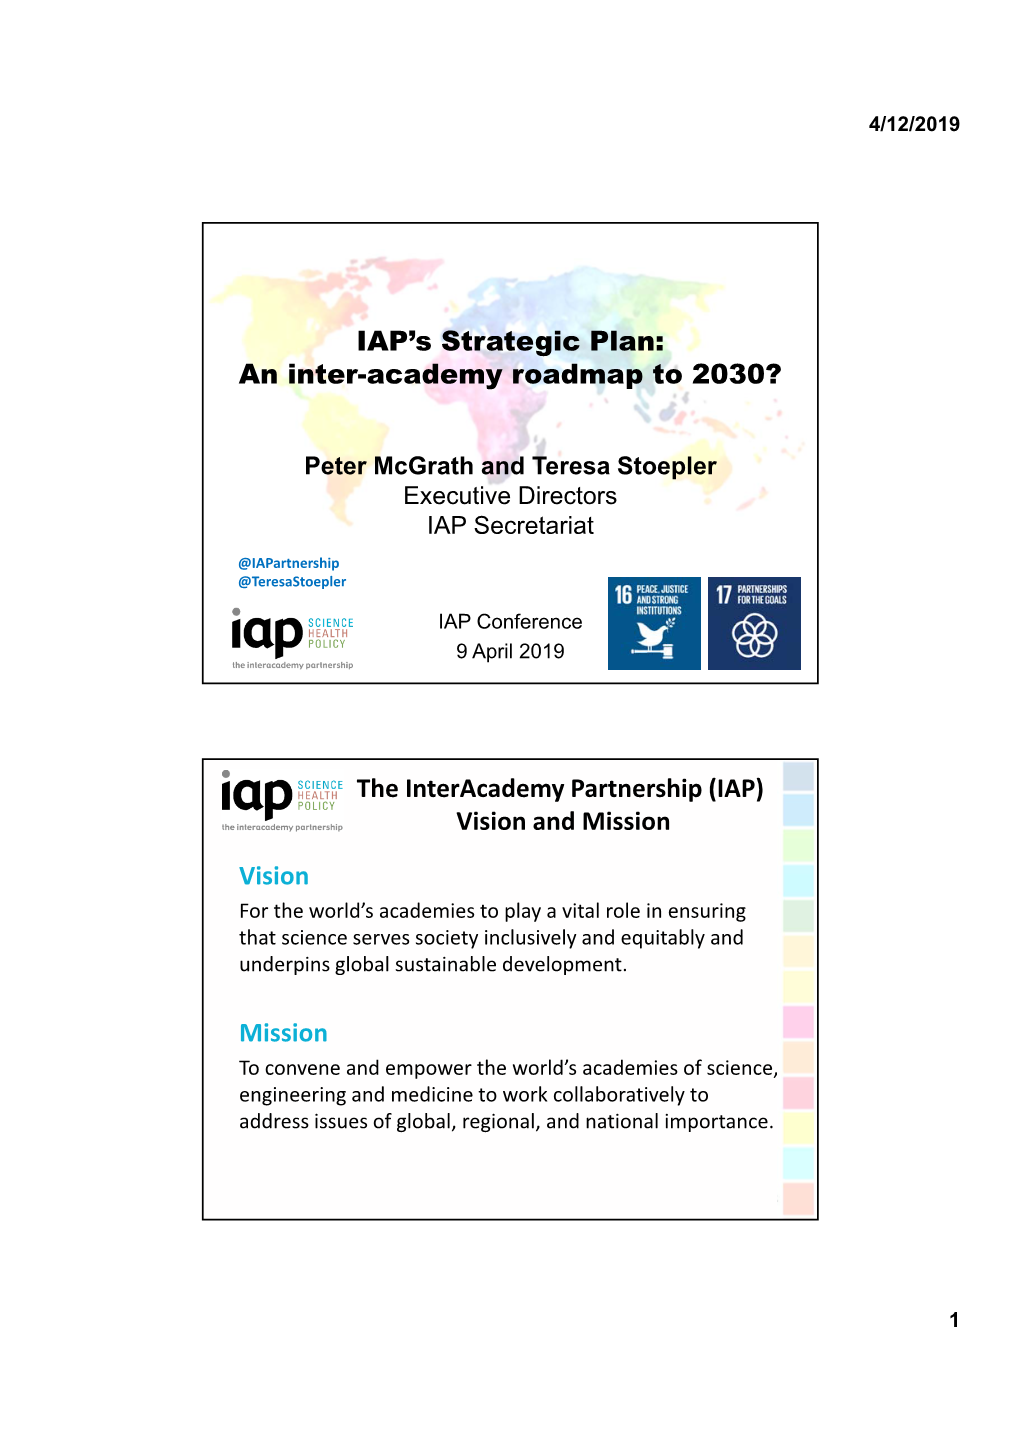 IAP's Strategic Plan: an Inter-Academy Roadmap to 2030?